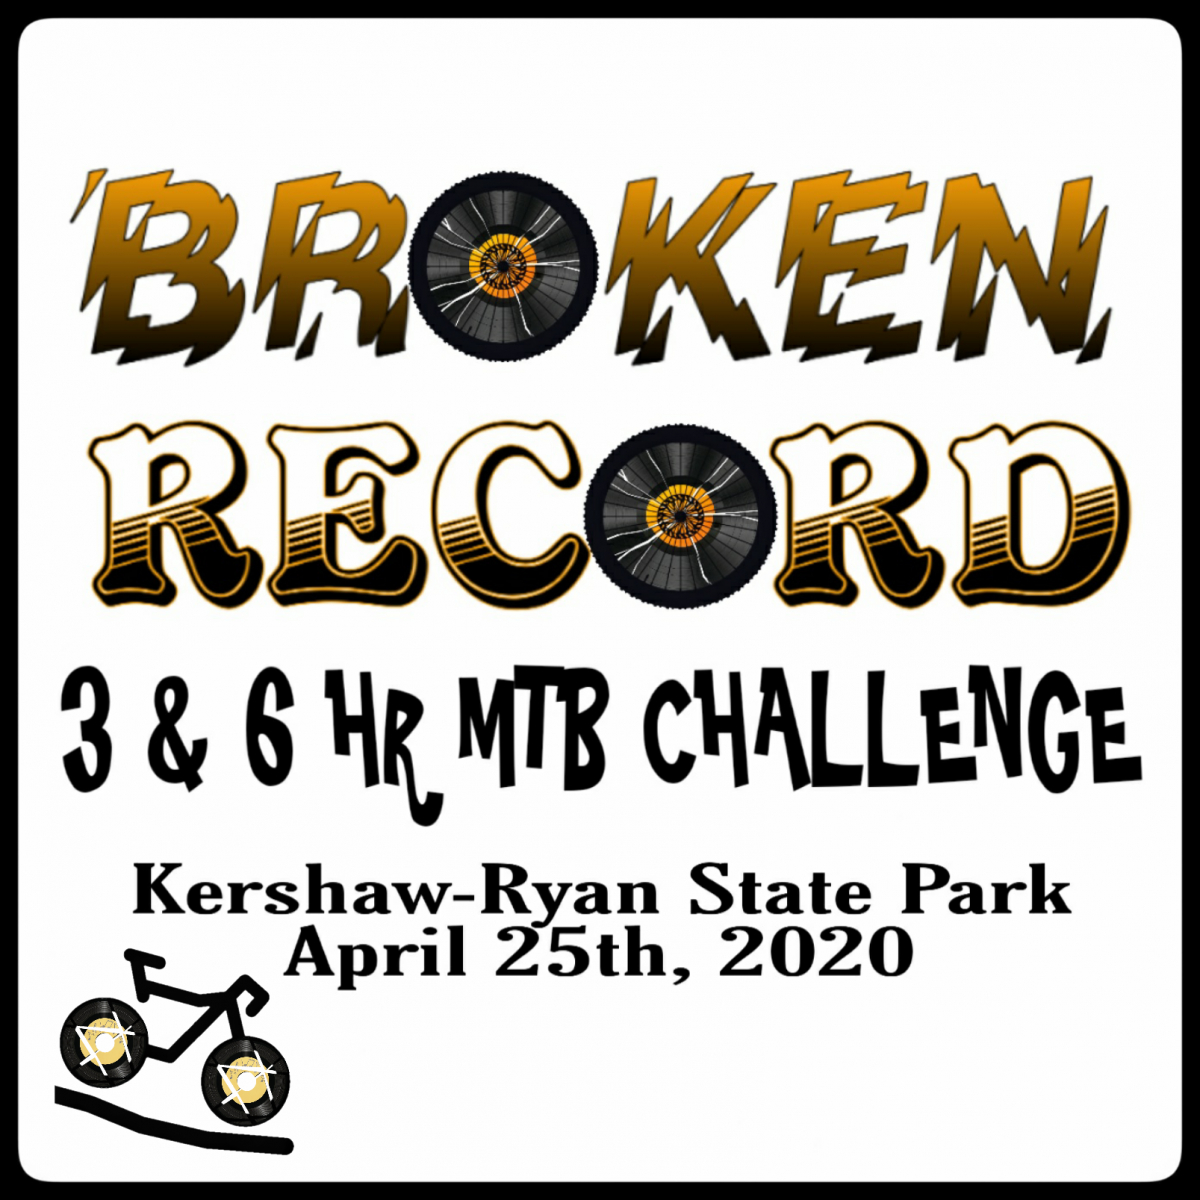 Broken Record 3 & 6 Hr MTB Challenge